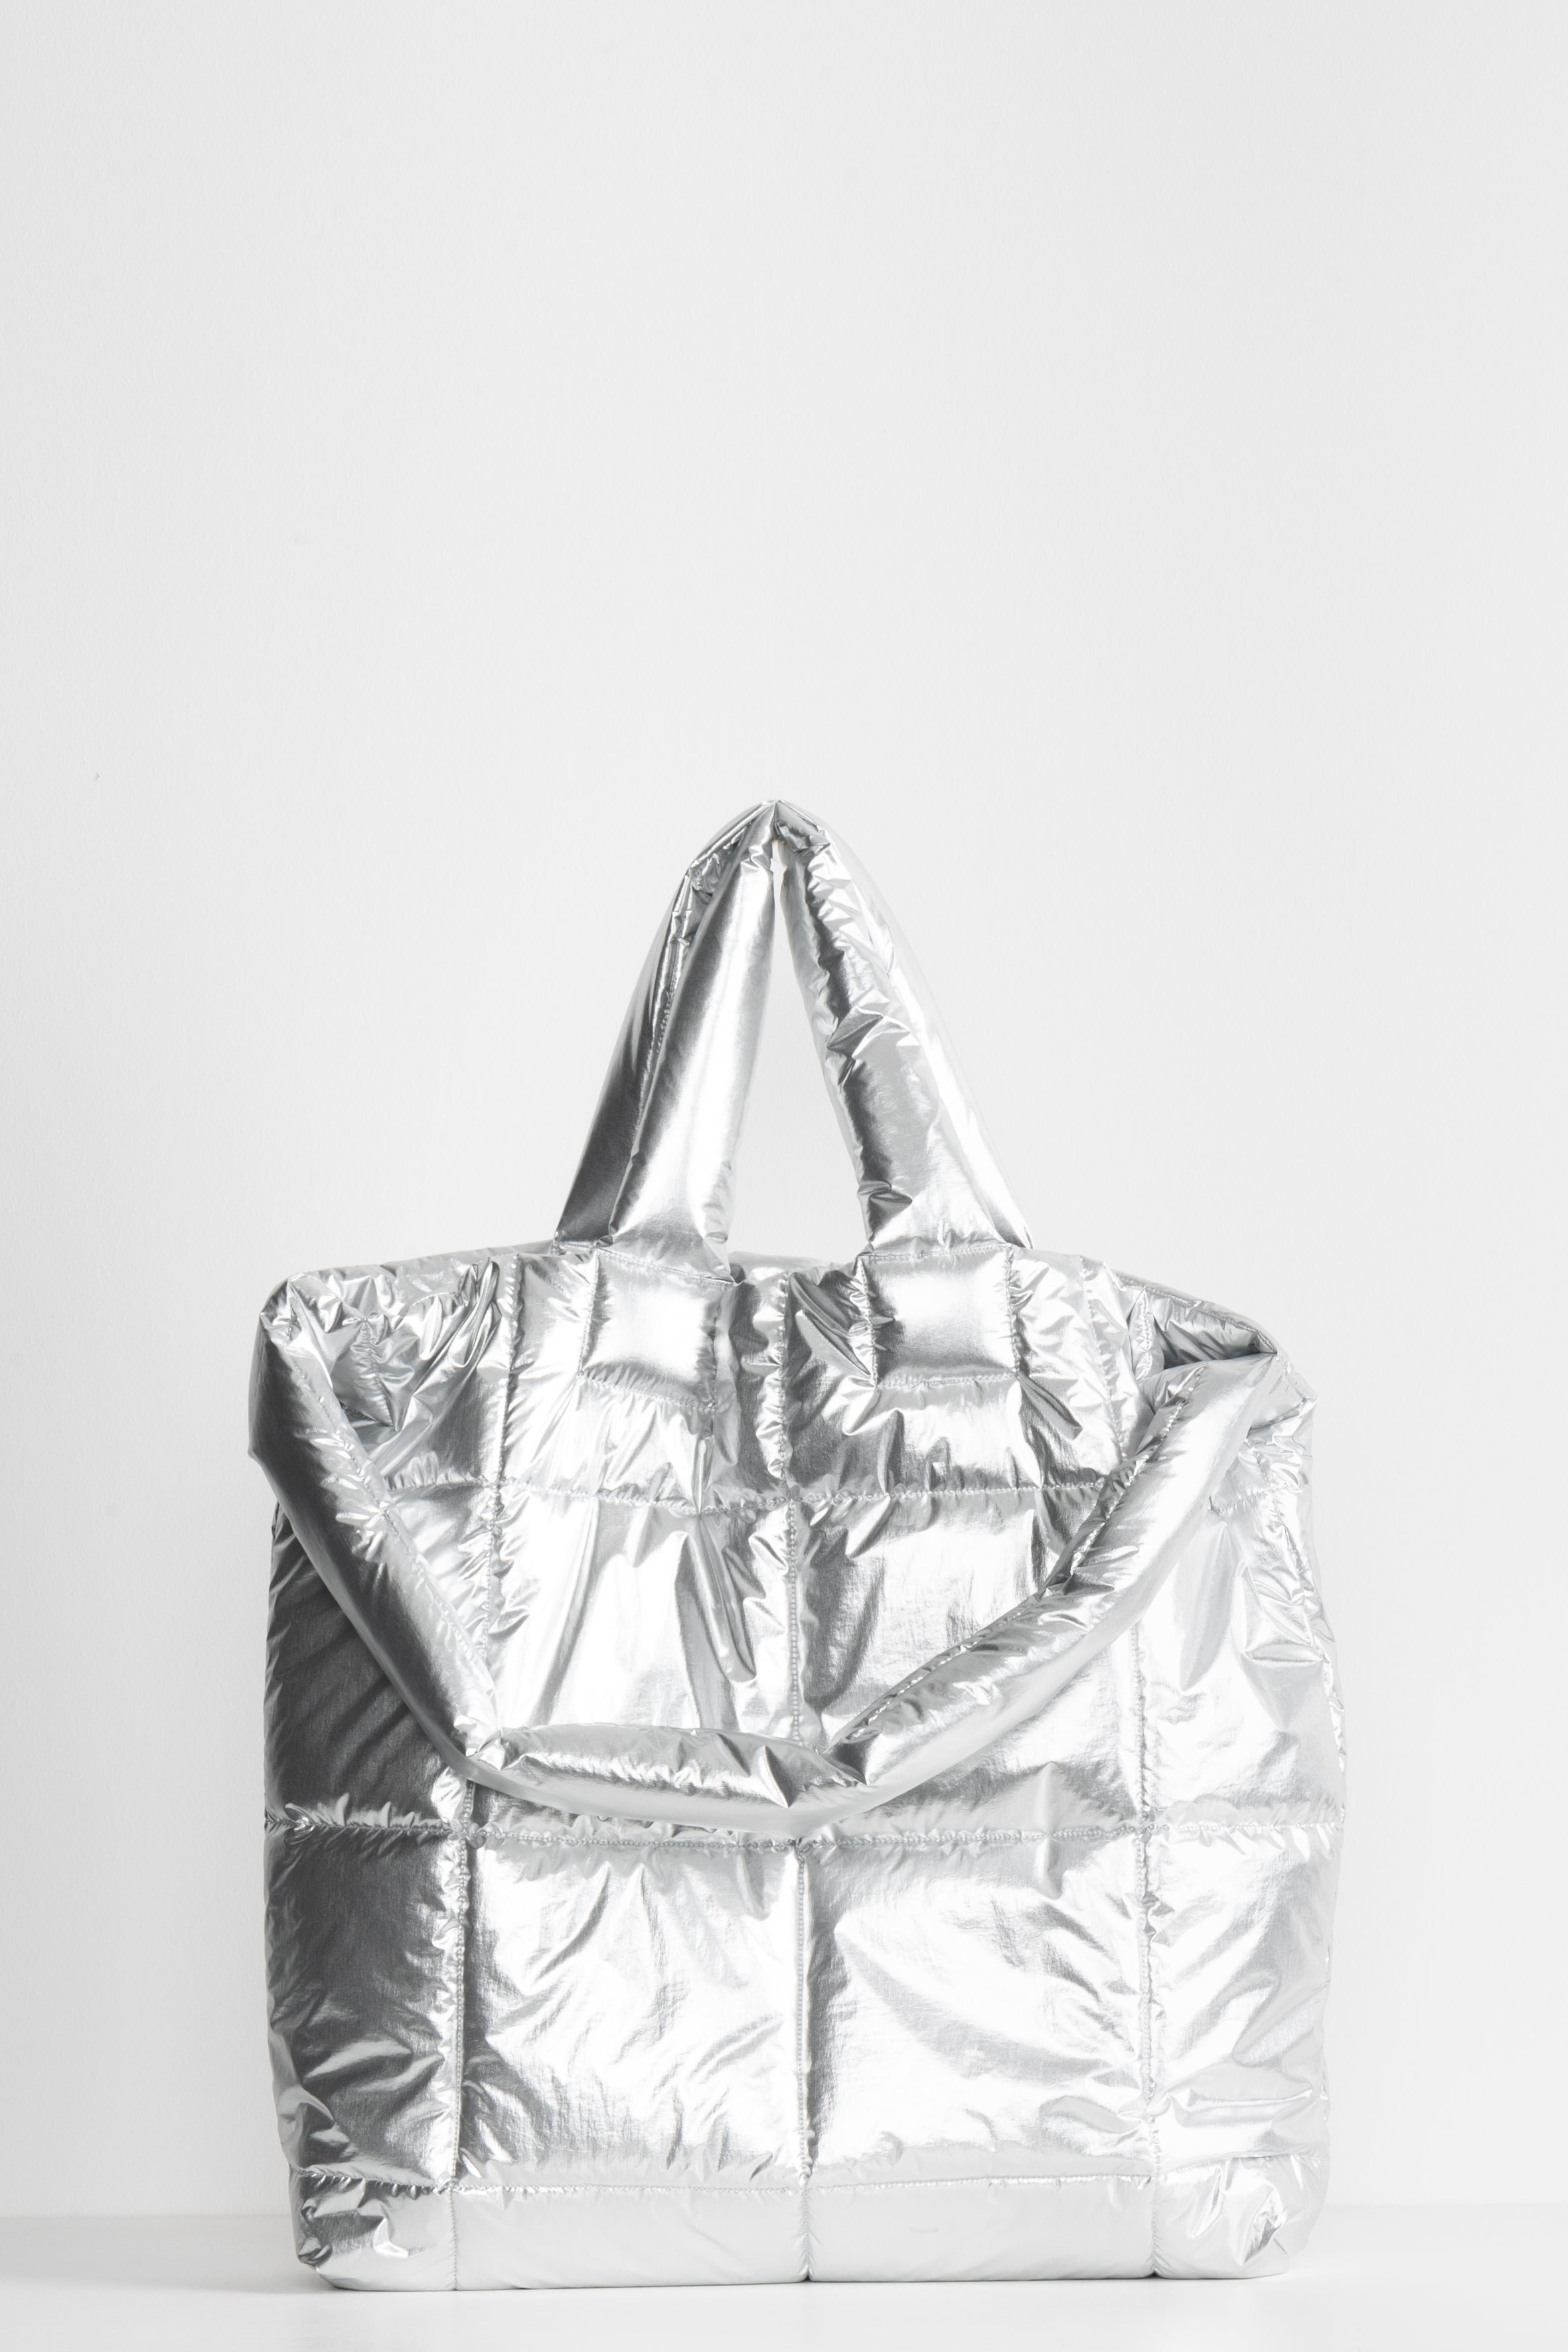 Voluminous Lempelius Pufferbag in the color silver bag